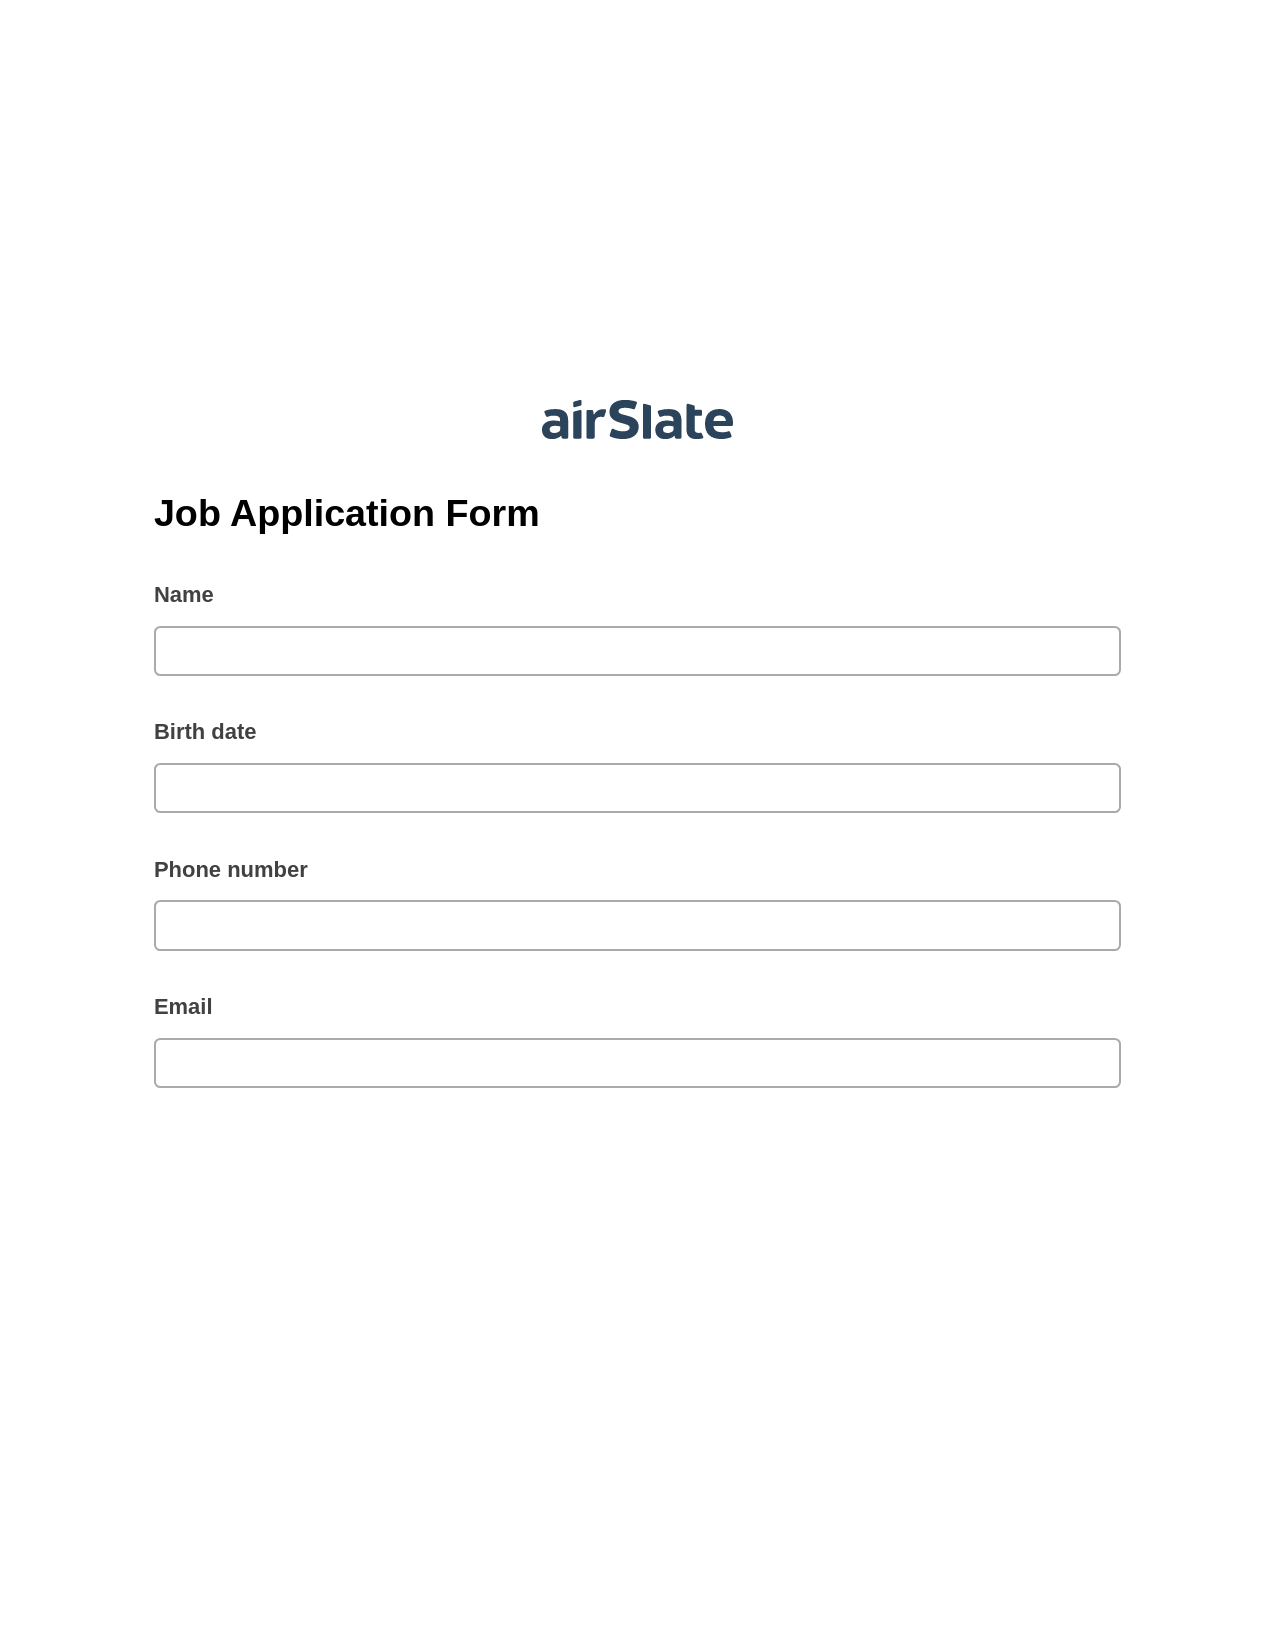 Multirole Job Application Form Pre-fill from Excel Spreadsheet Bot, Google Calendar Bot, Google Drive Bot